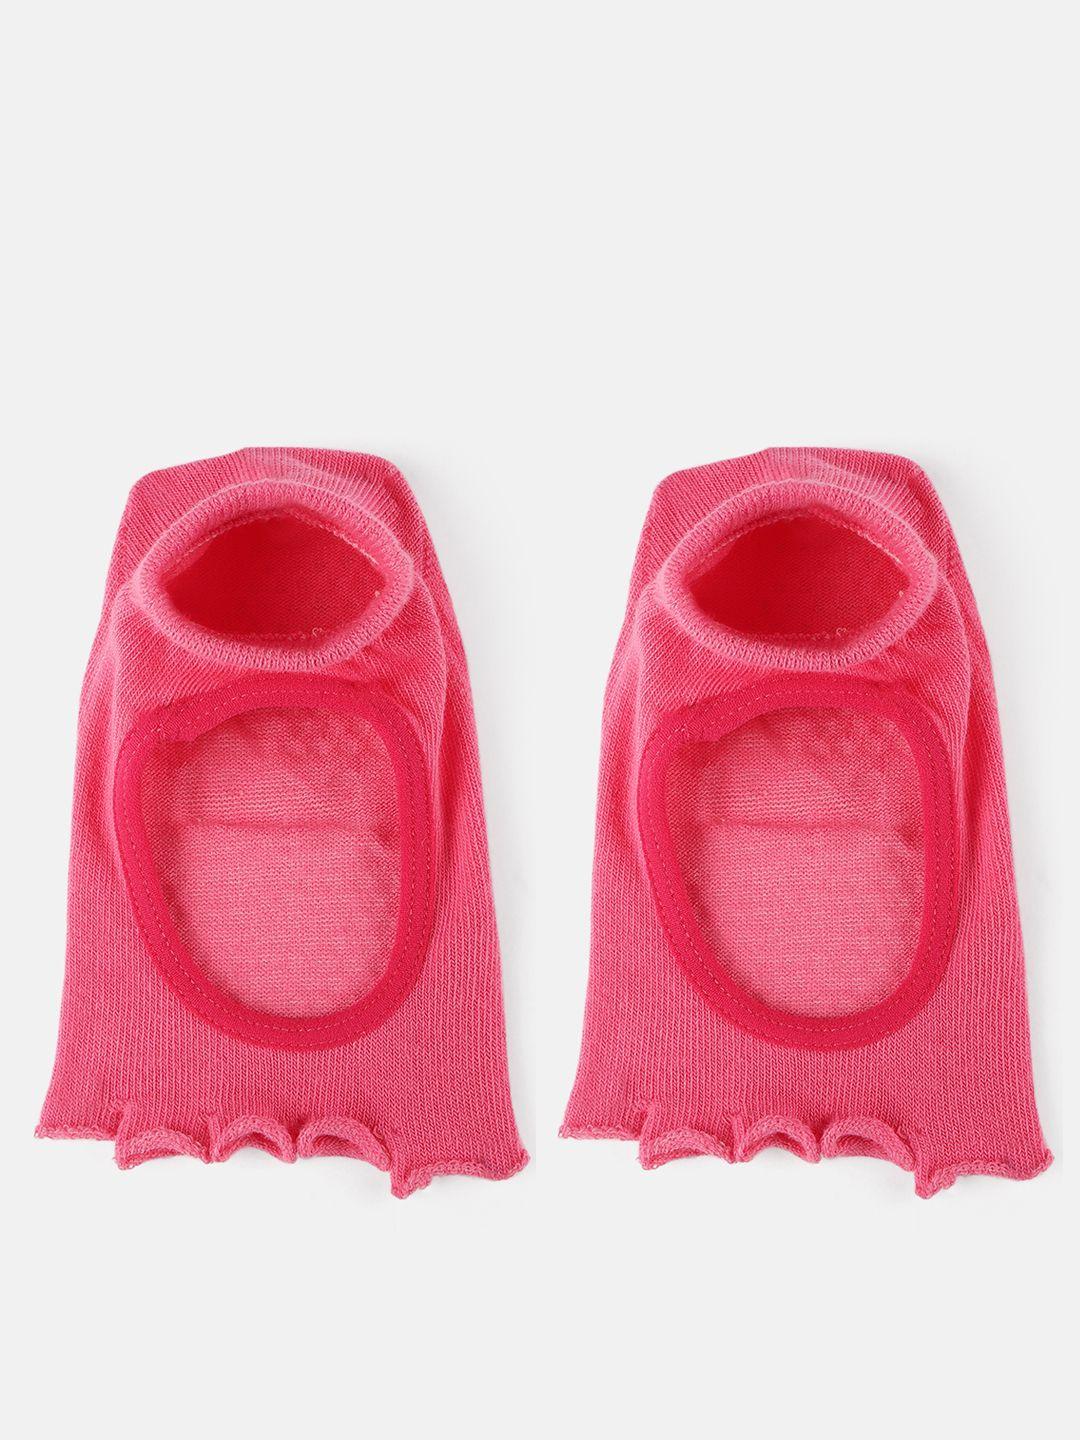 hrx by hrithik roshan women pink ankle length yoga socks